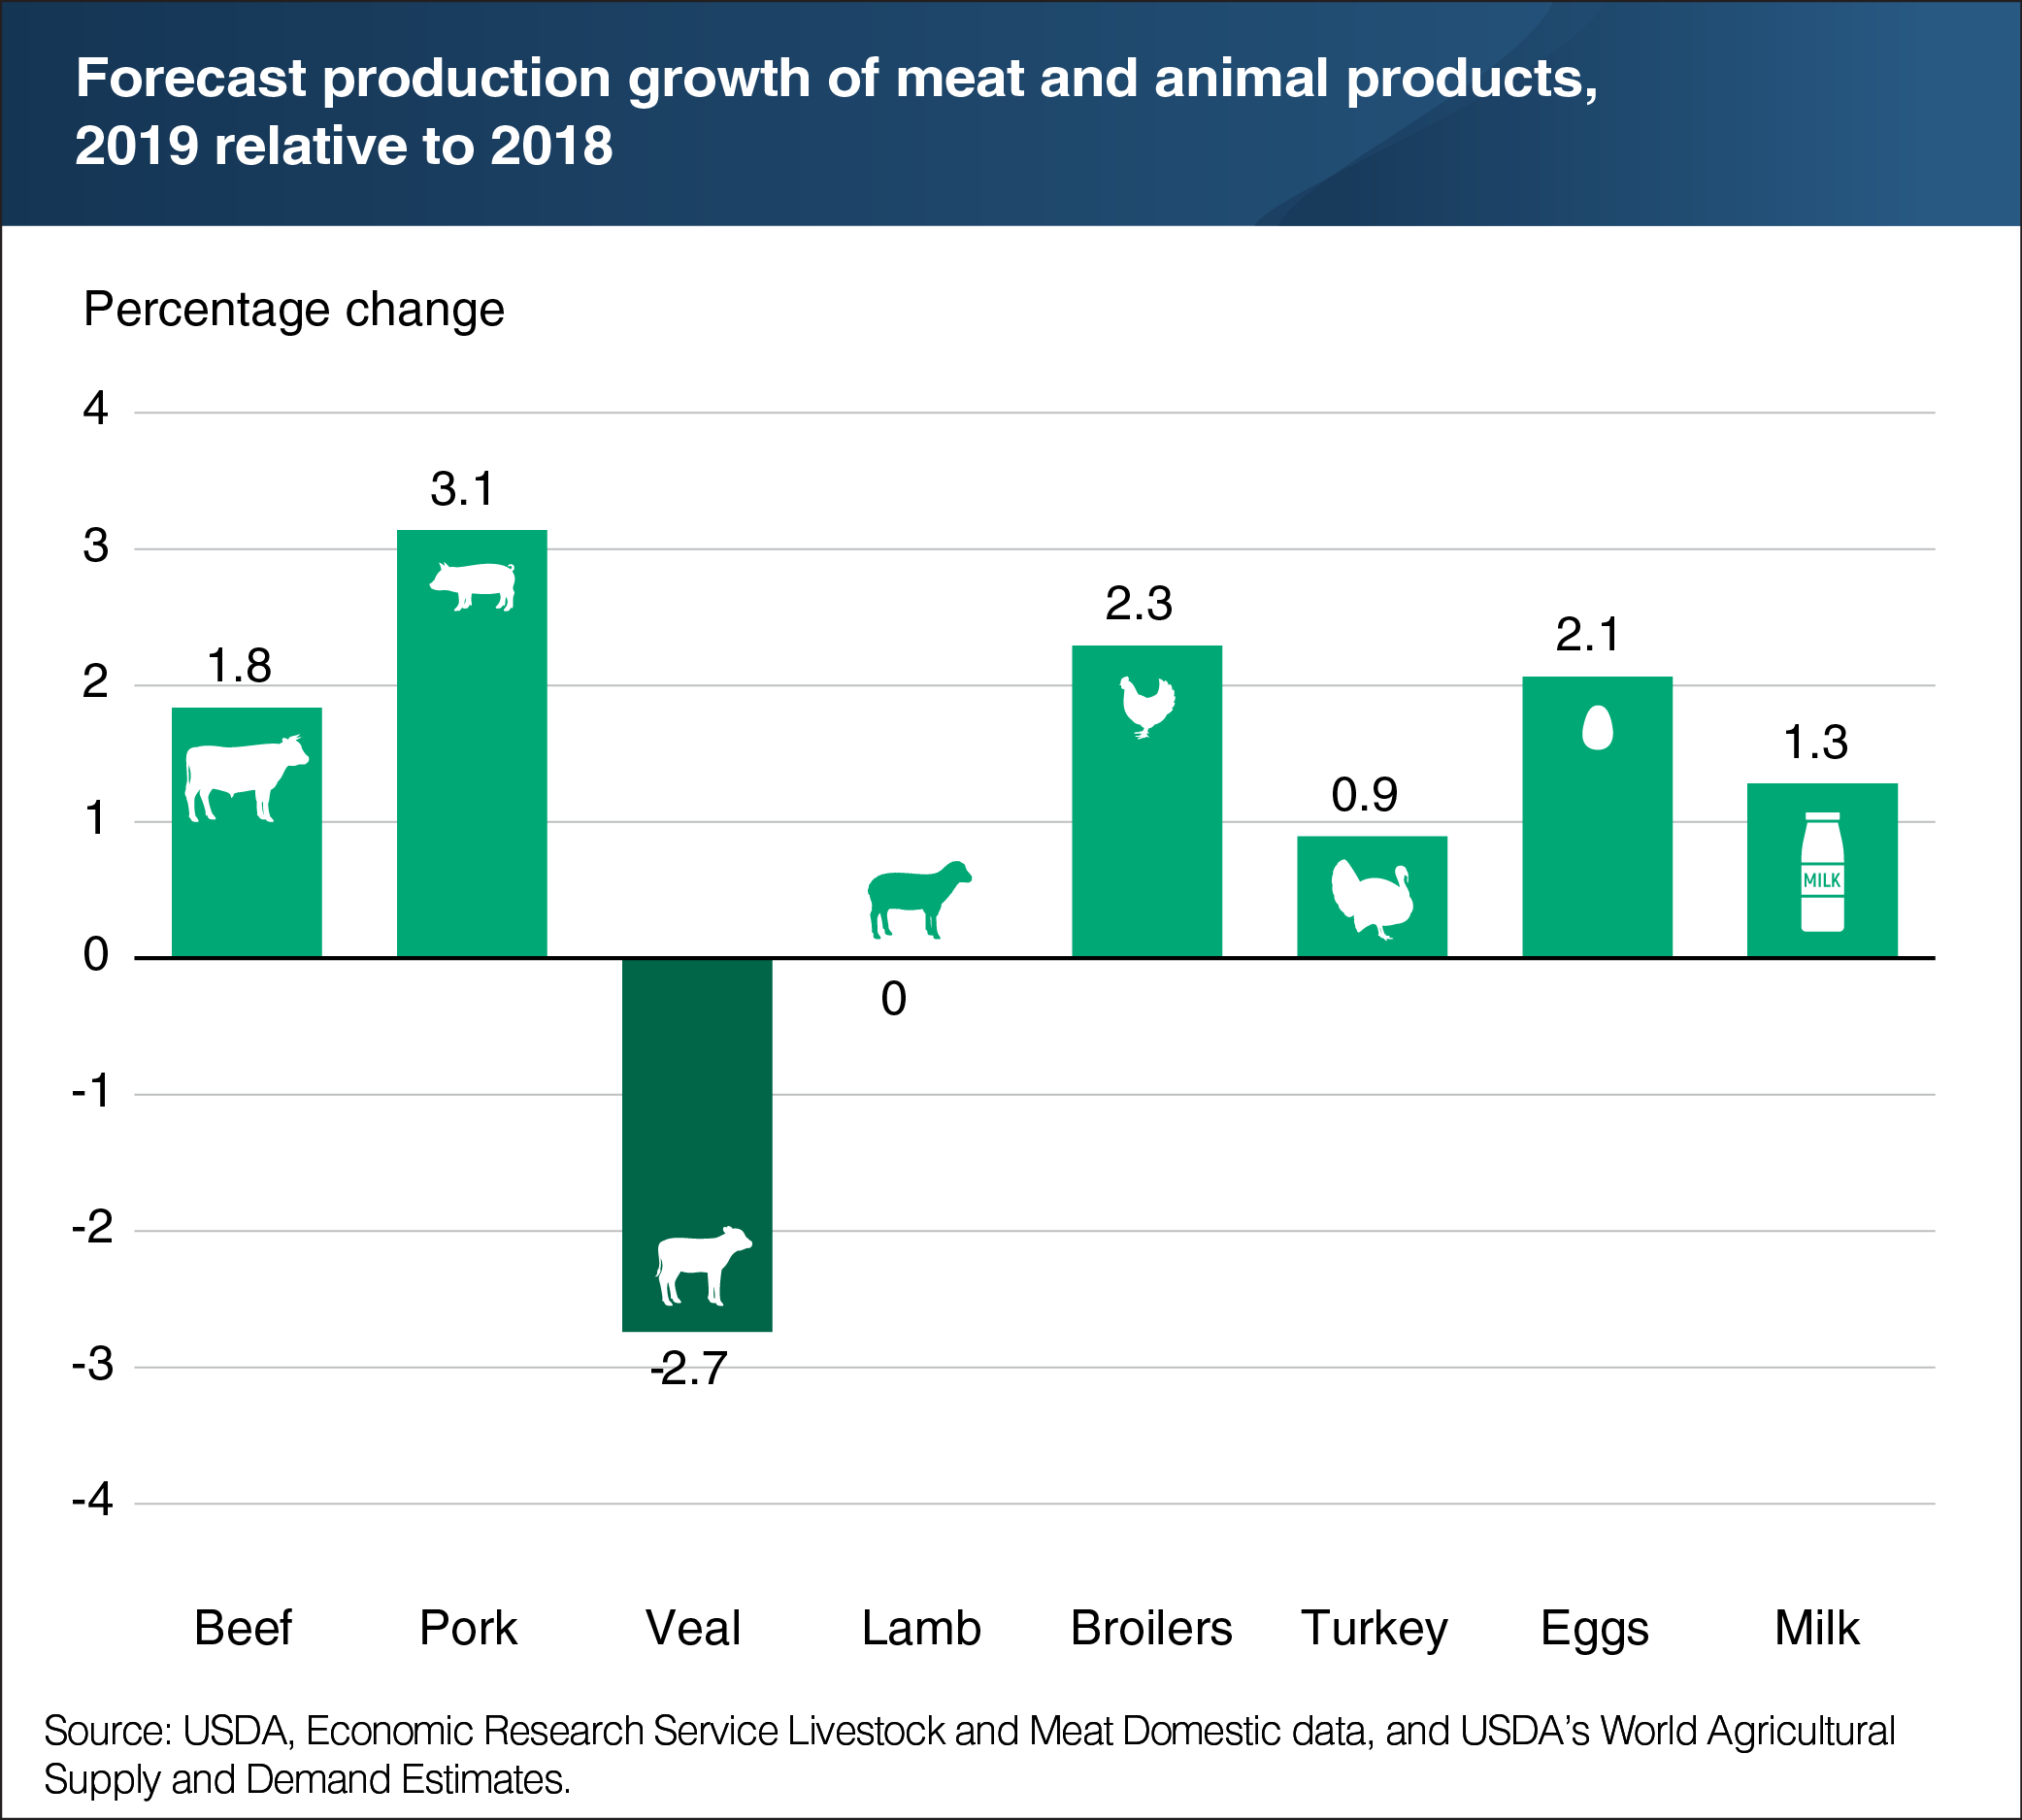 Lamb Growth Chart